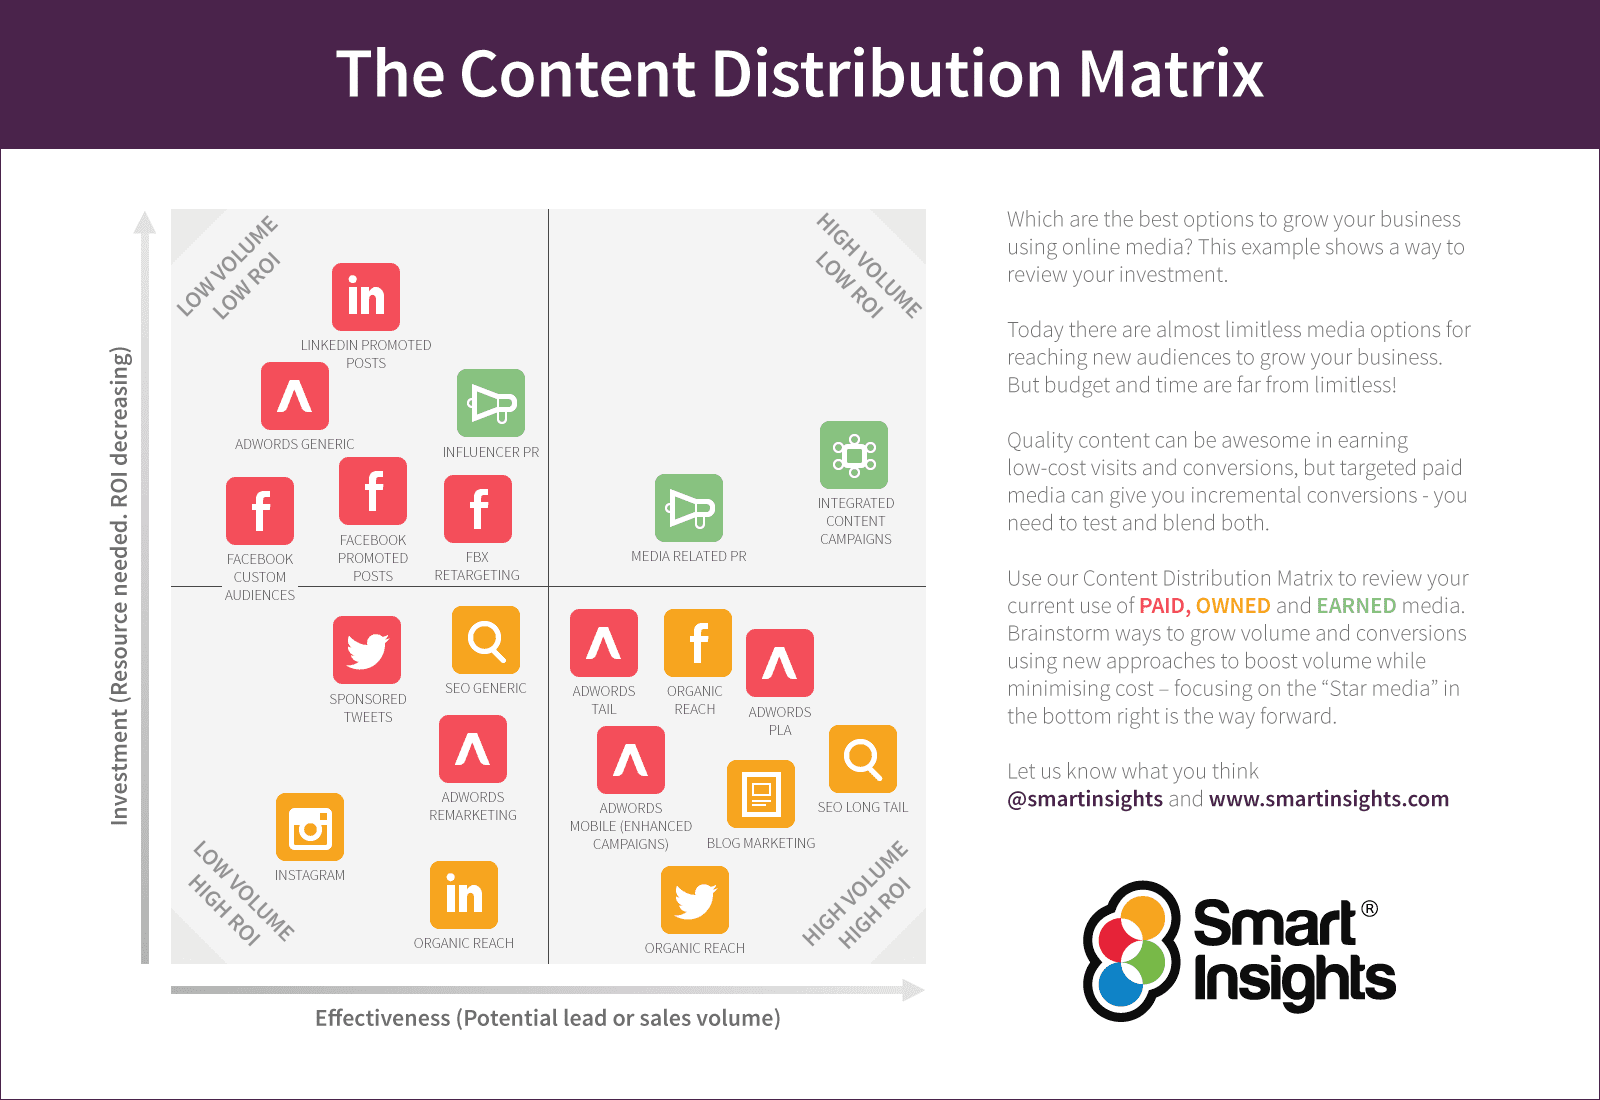 Smart Insights content distribution mix